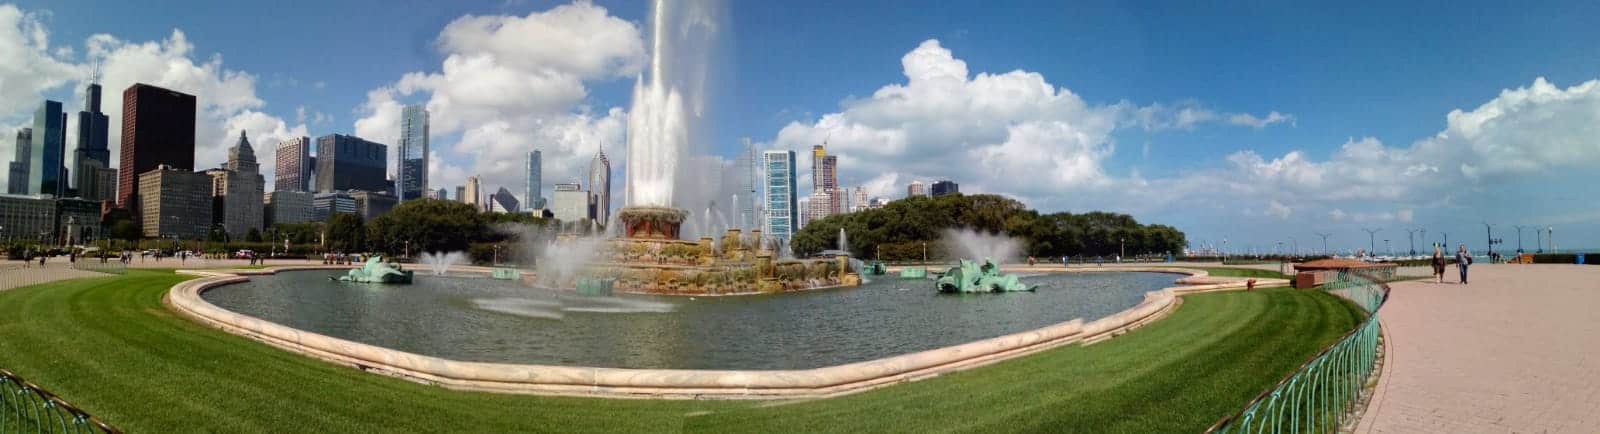 Chicago- Buckingham fountain